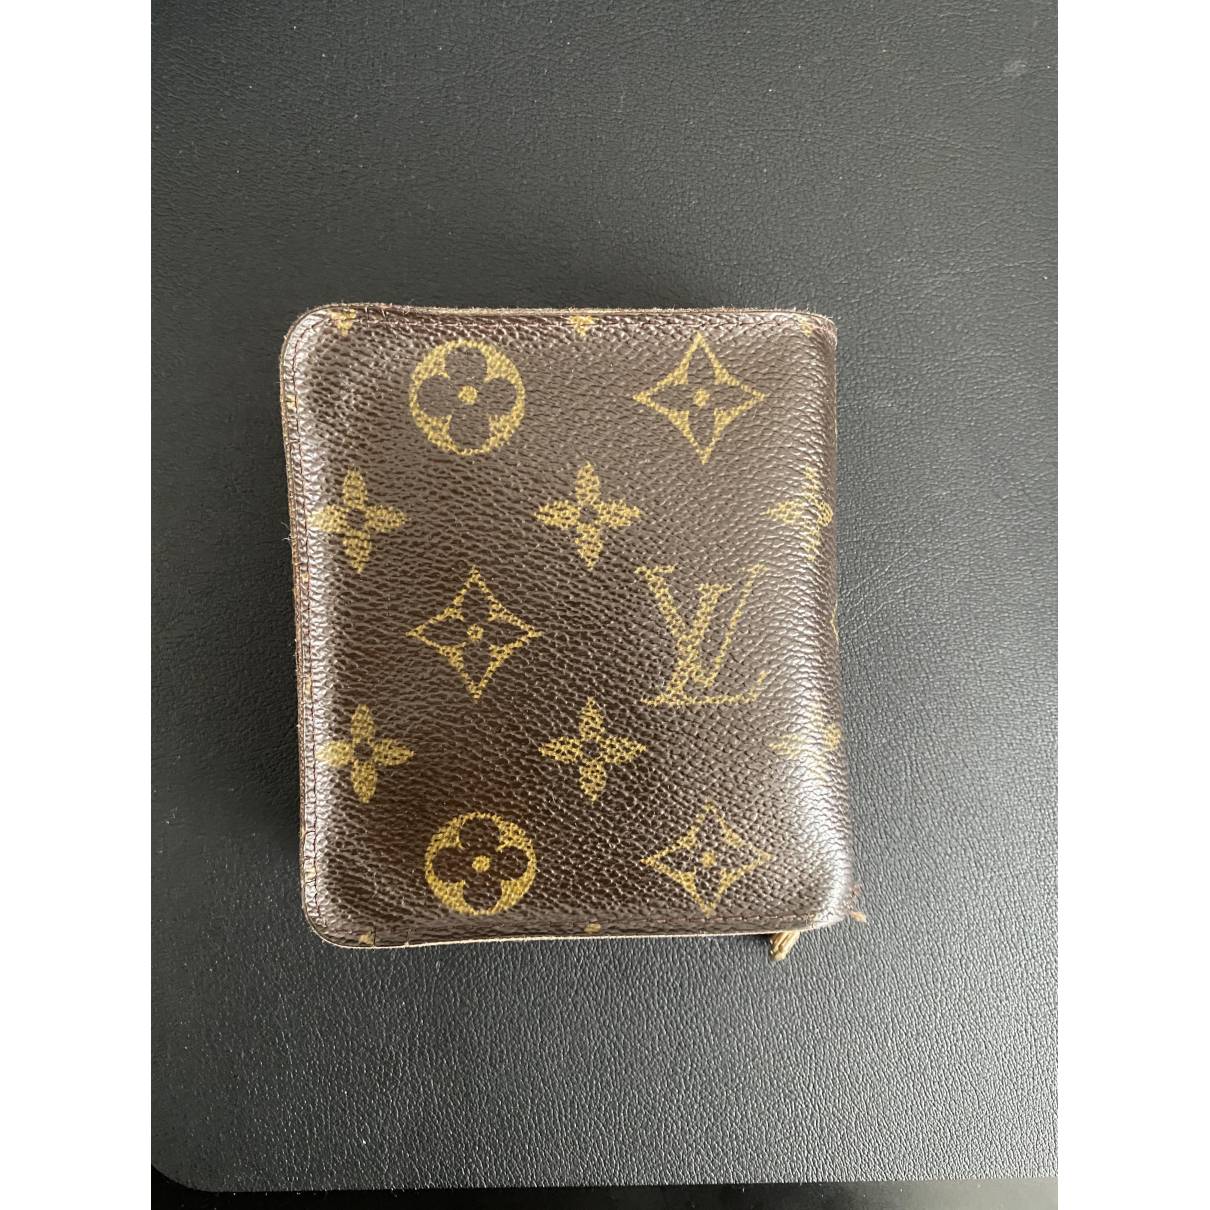 Authentic lv Louis vuitton alexandra wallet, Luxury, Bags